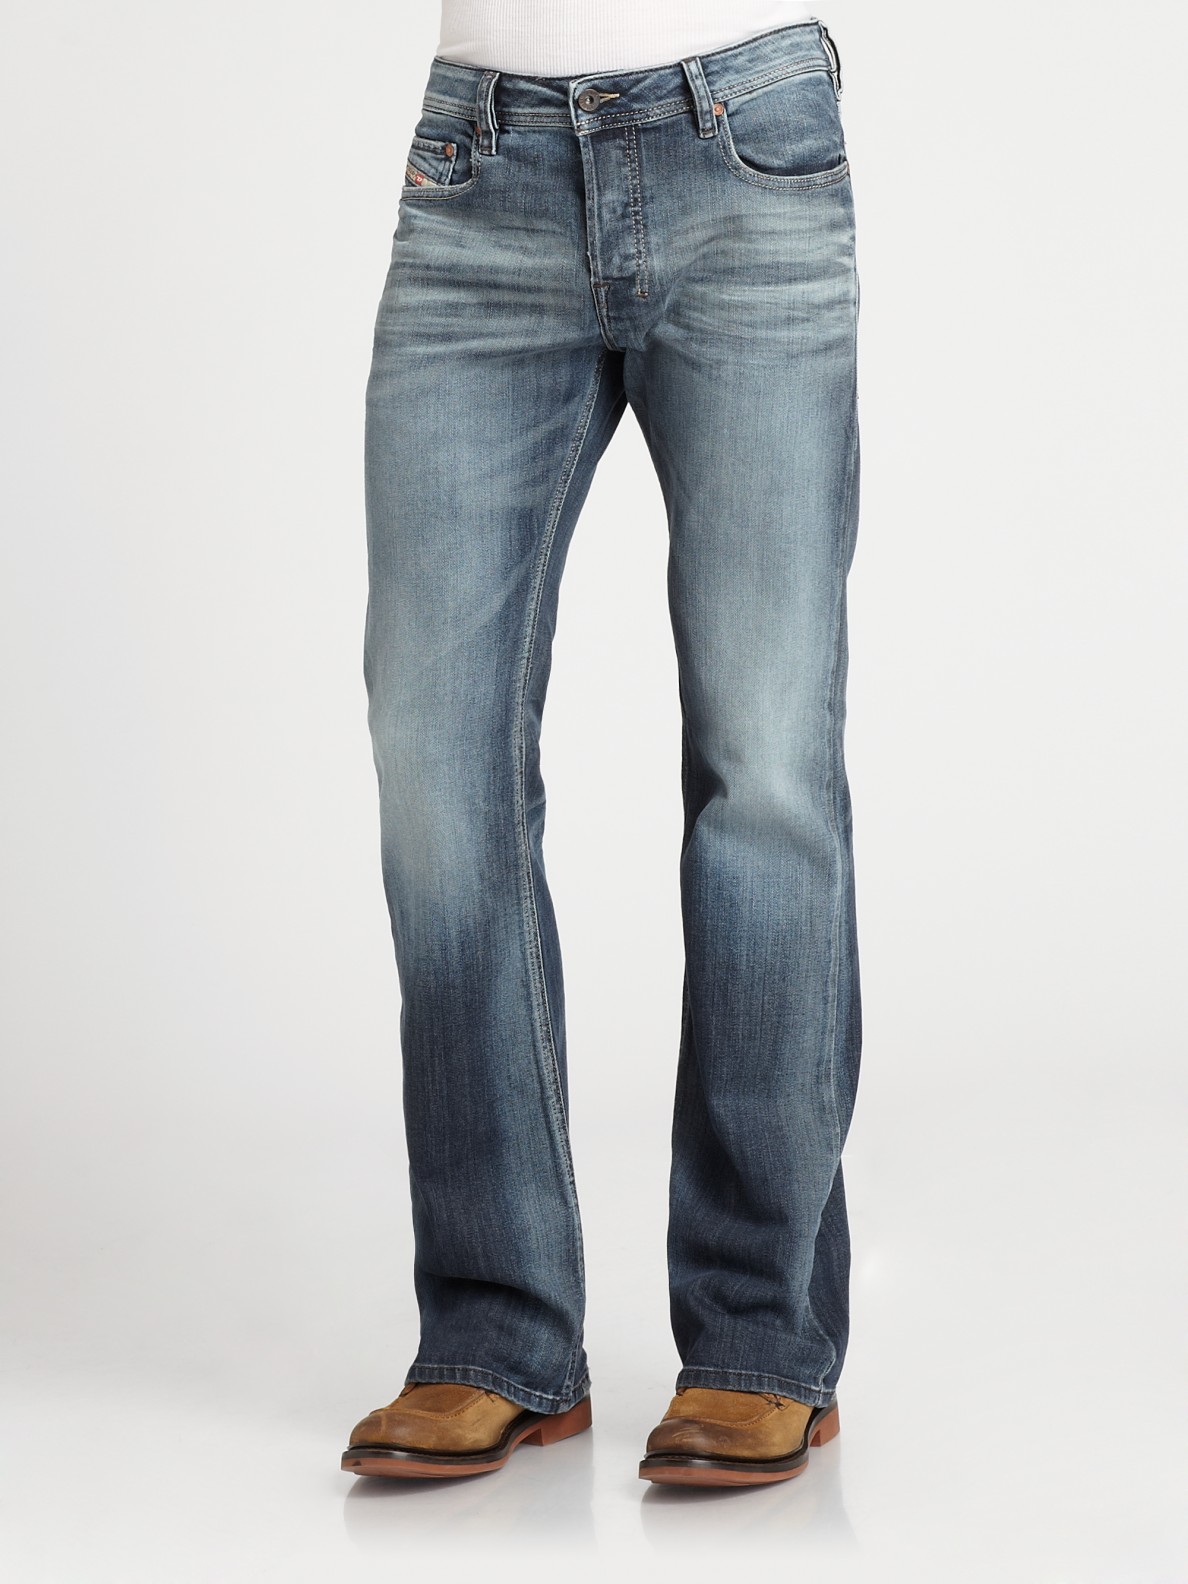 DIESEL Zathan Bootcut Jeans in Denim (Blue) for Men - Lyst